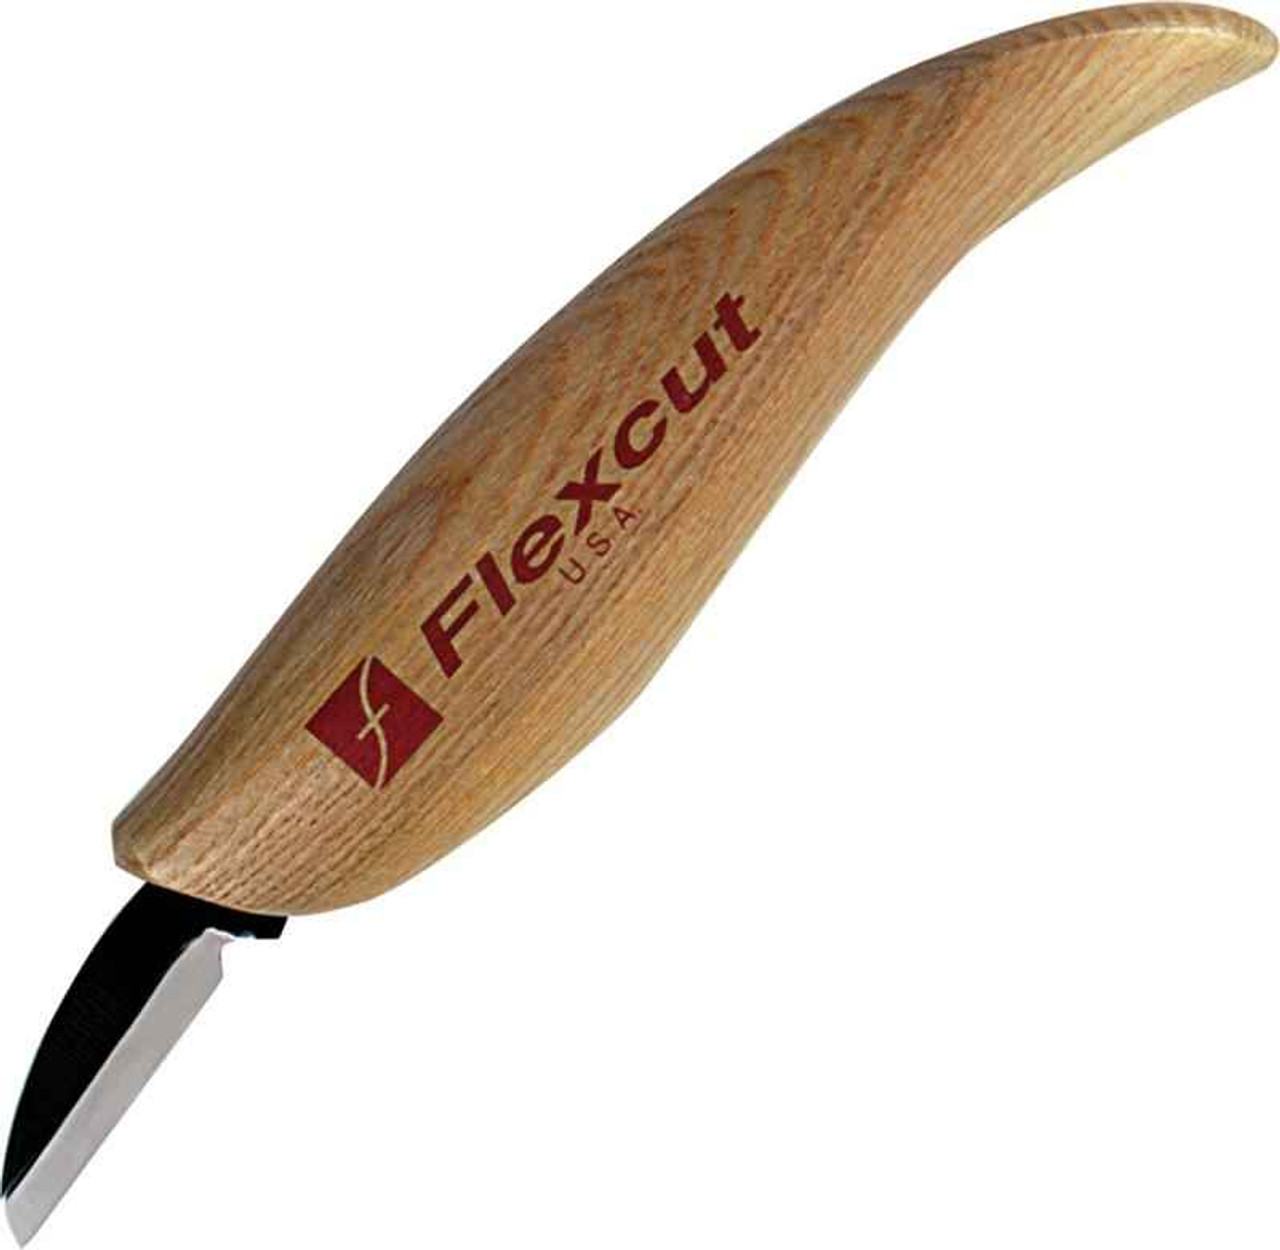 Flexcut Cutting Knife. 6 1/8" overall.